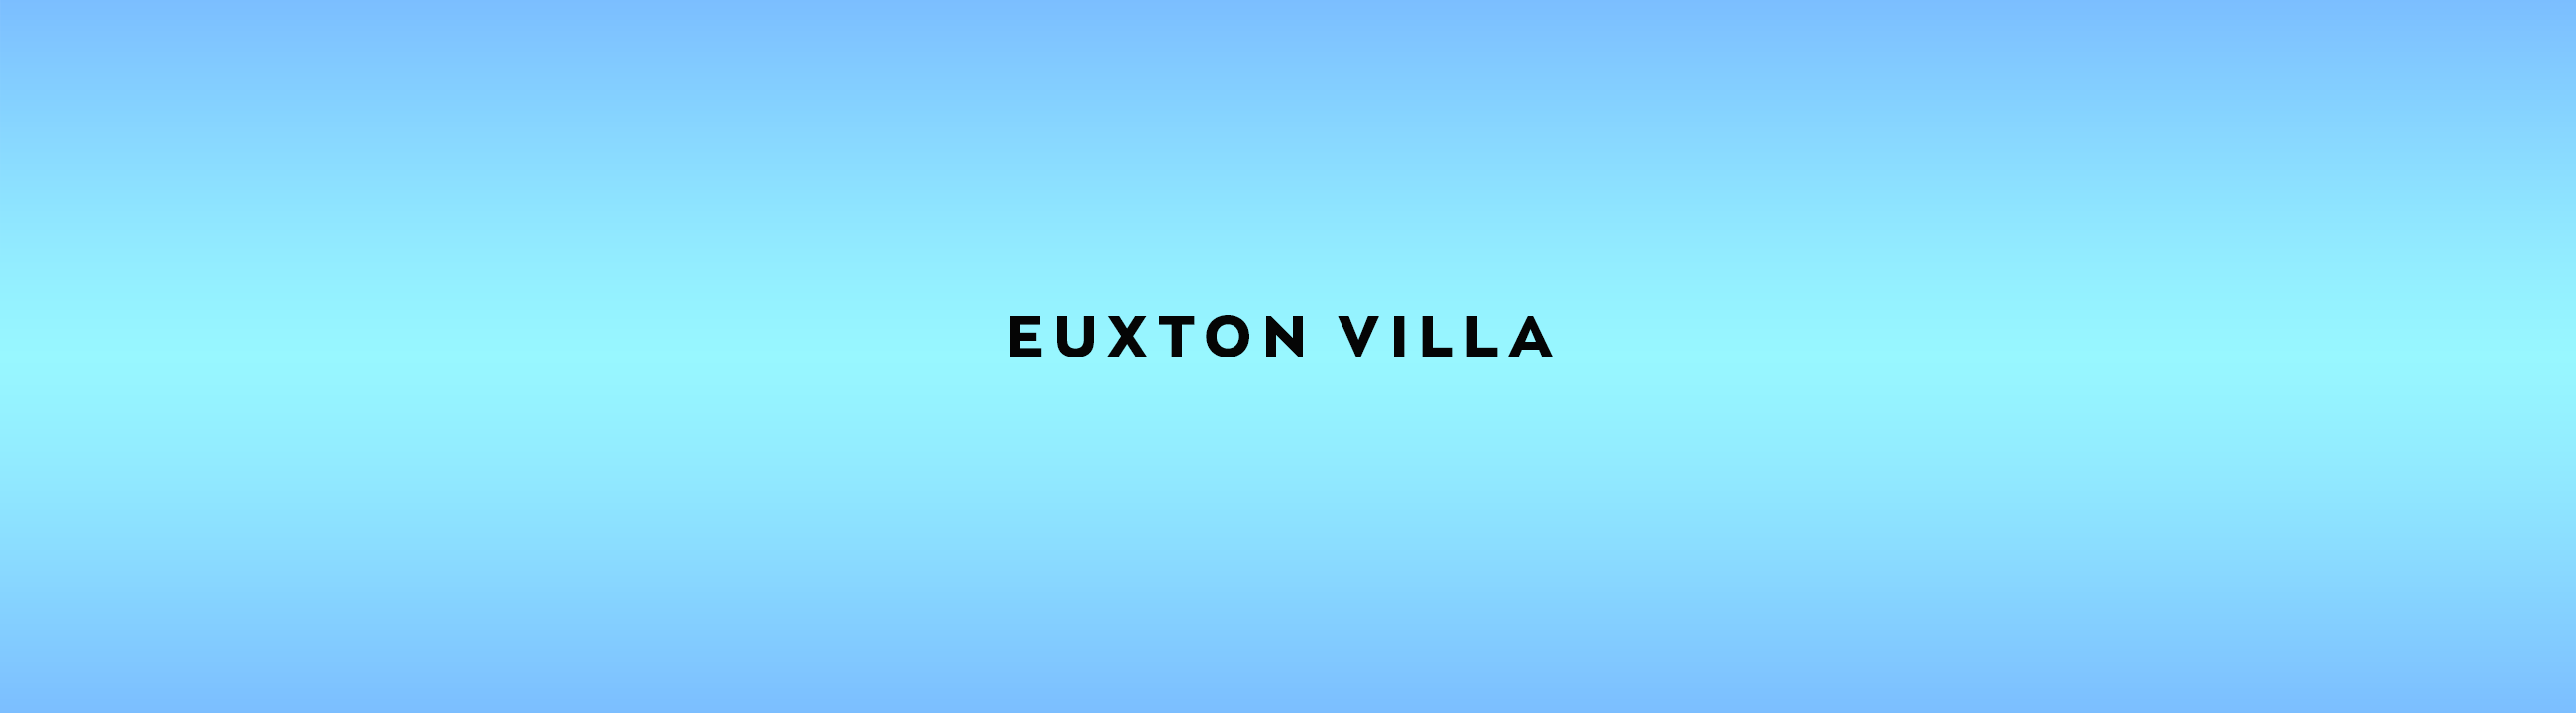 EUXTON VILLA FC